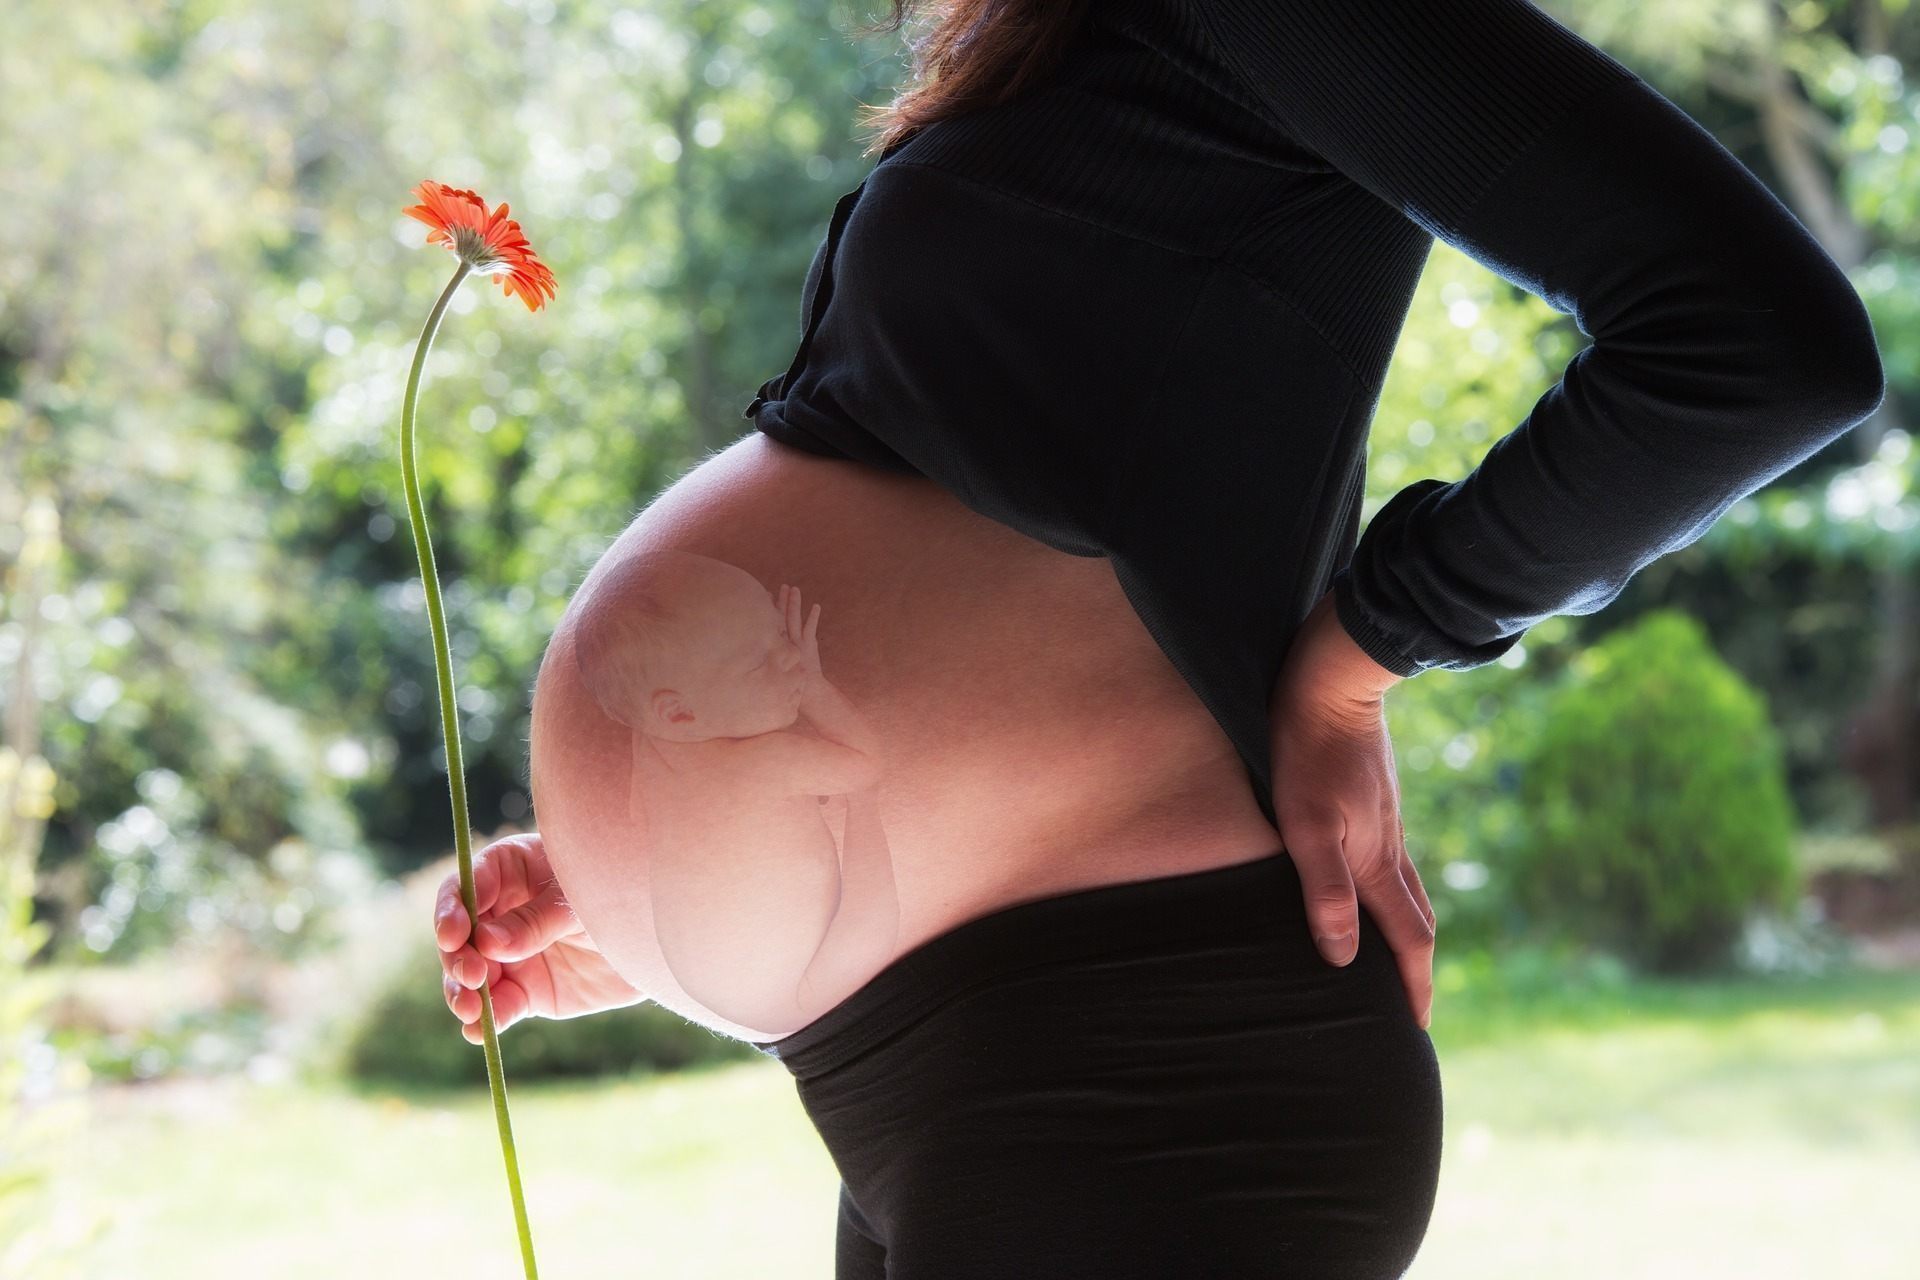 Aromatherapie Schwangerschaft